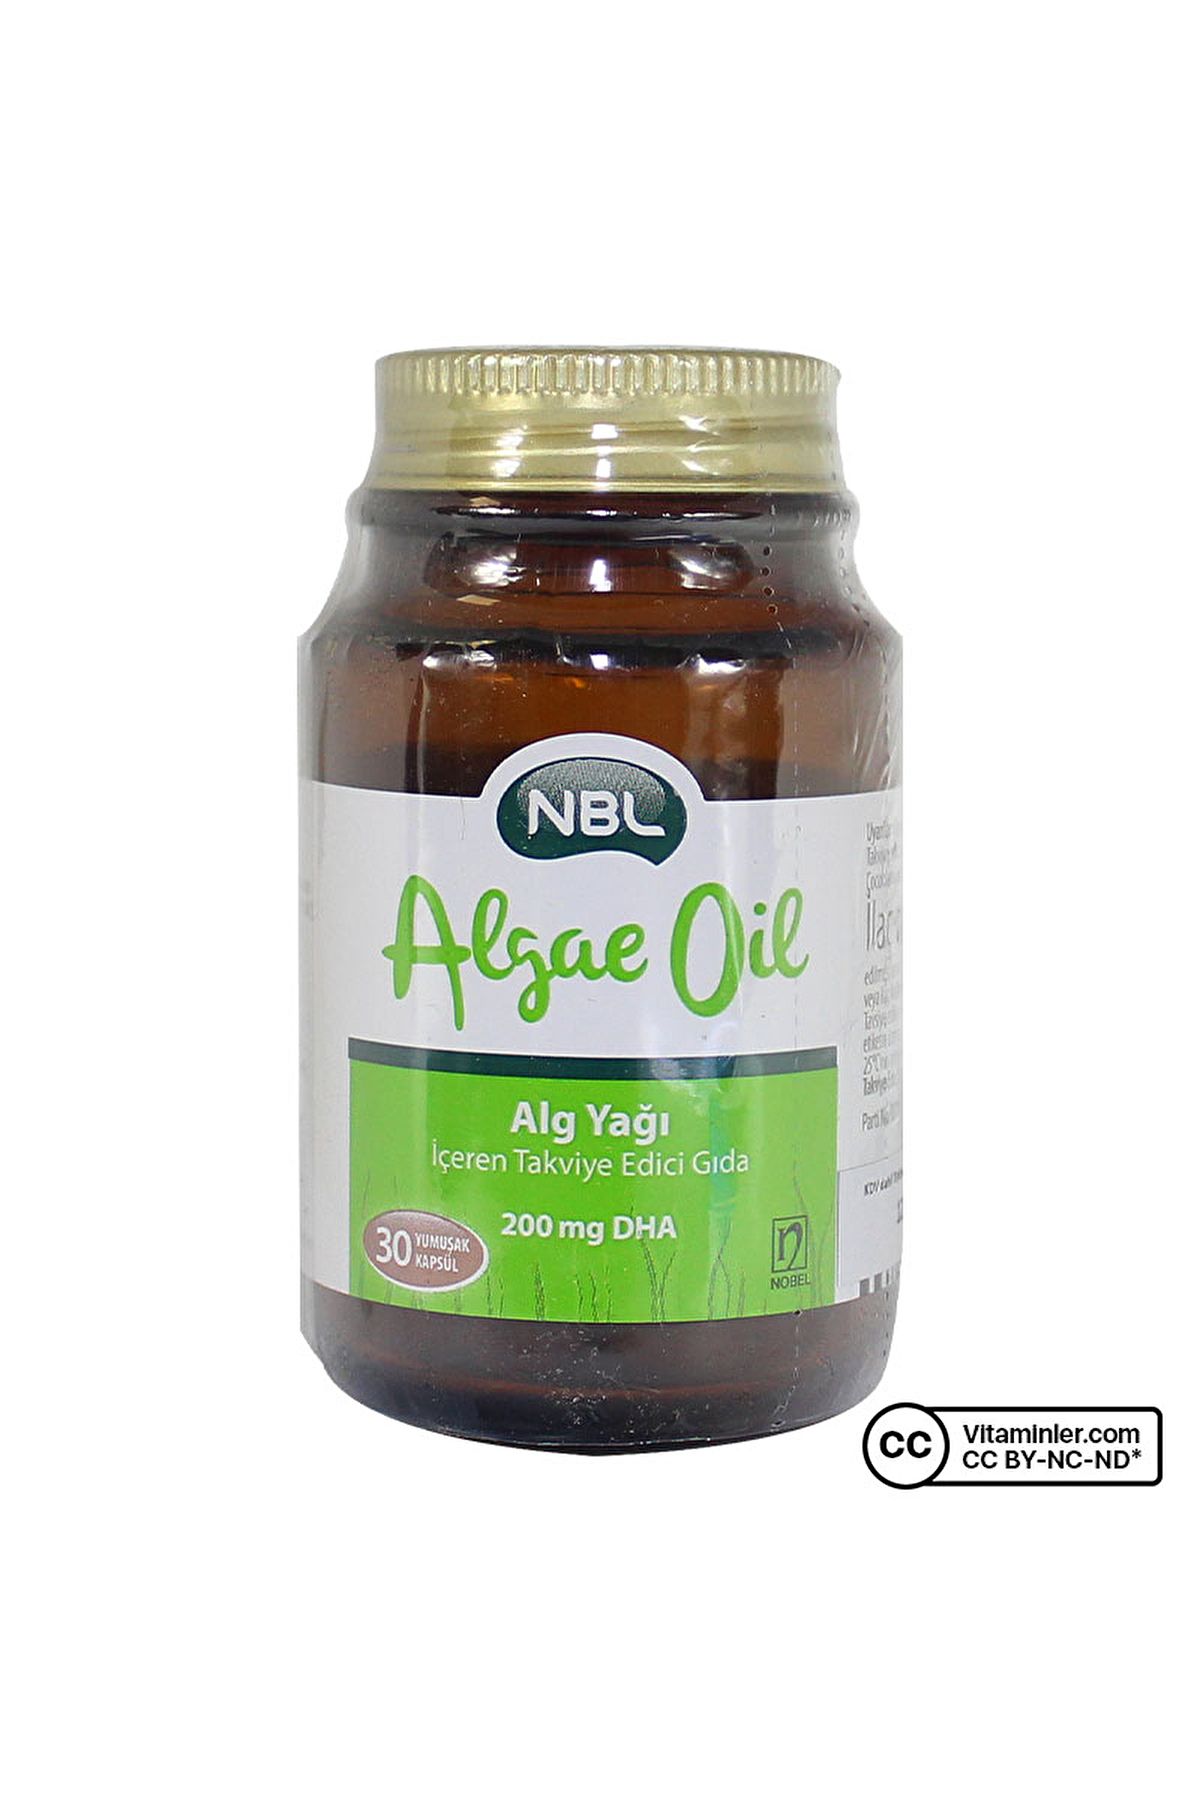 Nobel Nbl Algae Oil - Alg Yağı 30 Kapsül